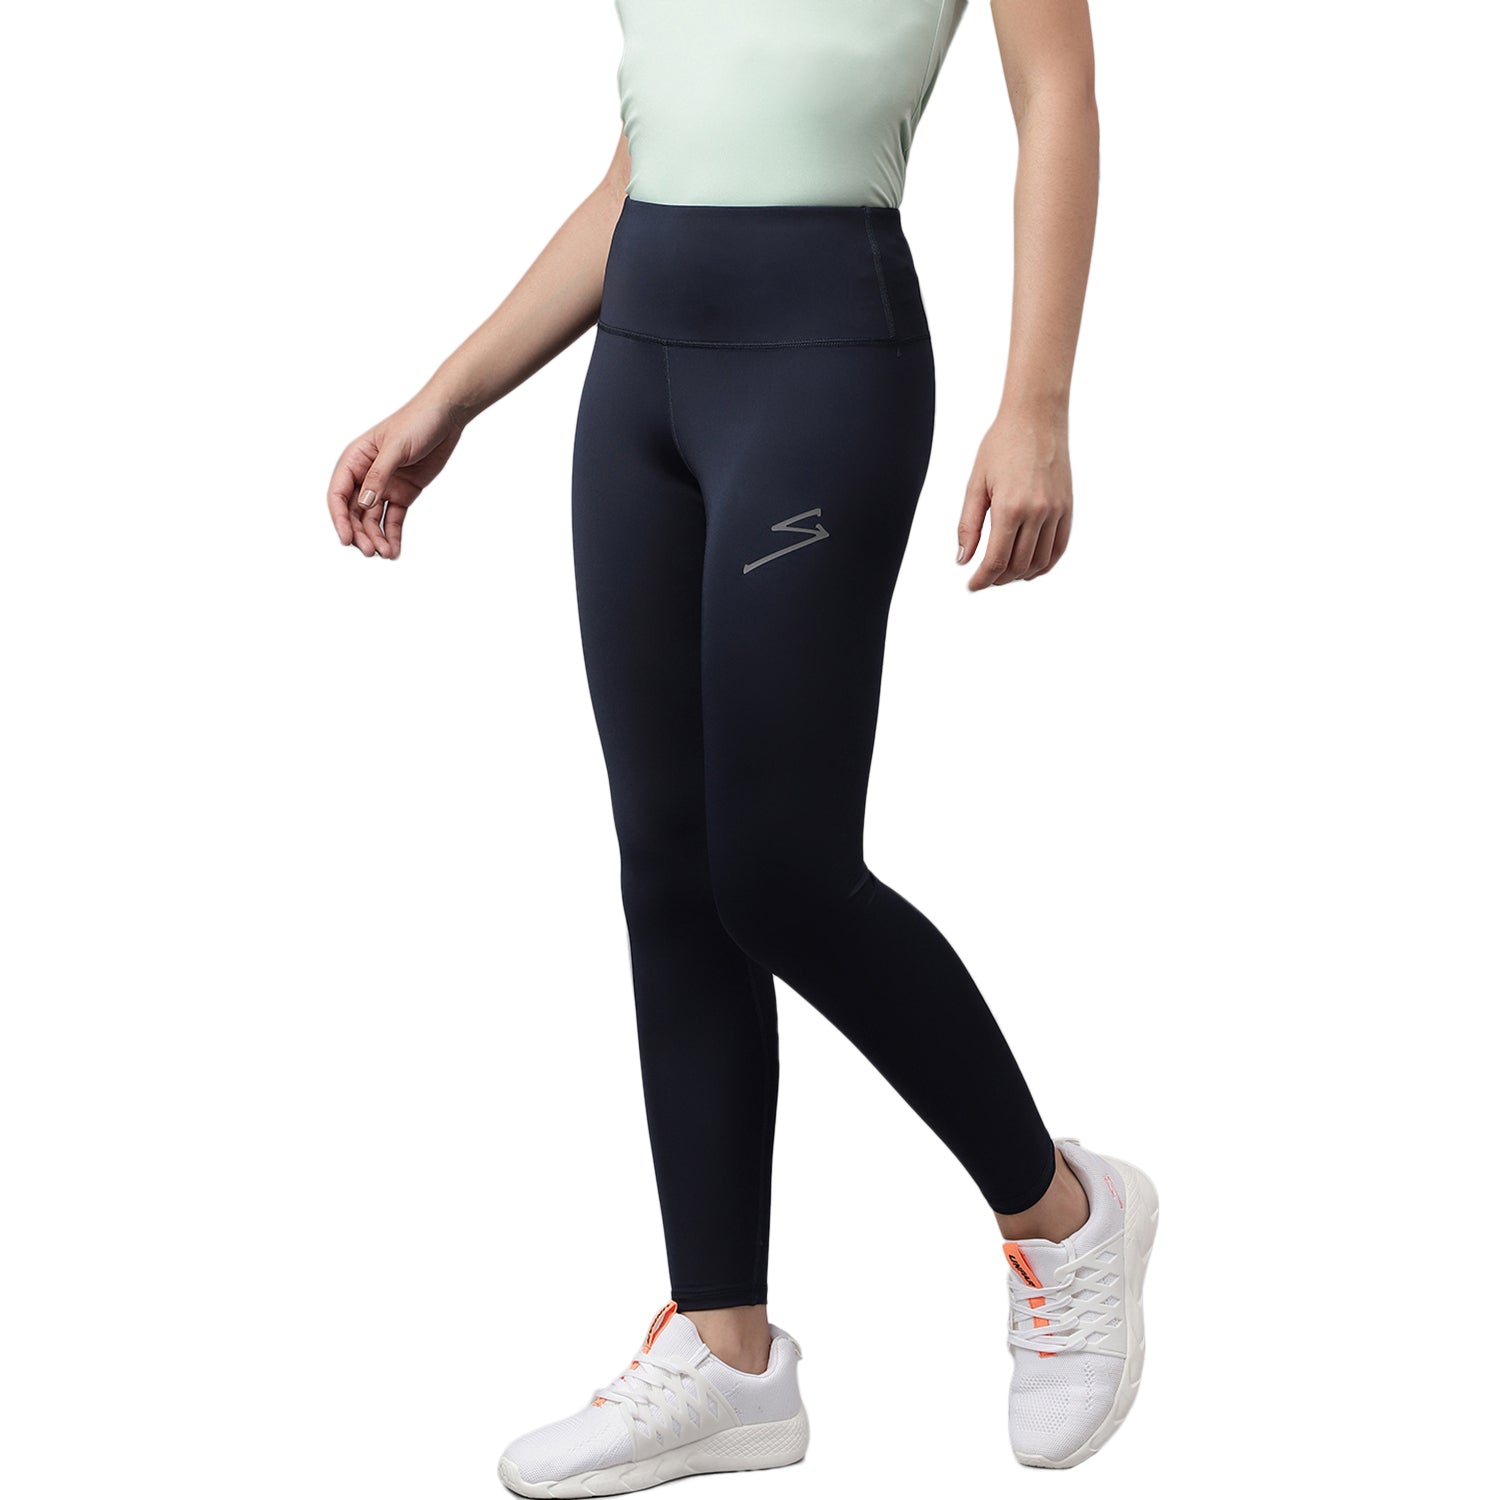 SG UNPAR By SG Women's Navy Tights | Ideal for Trail Running, Fitness & Training, Jogging, Regular & Fashion Wear